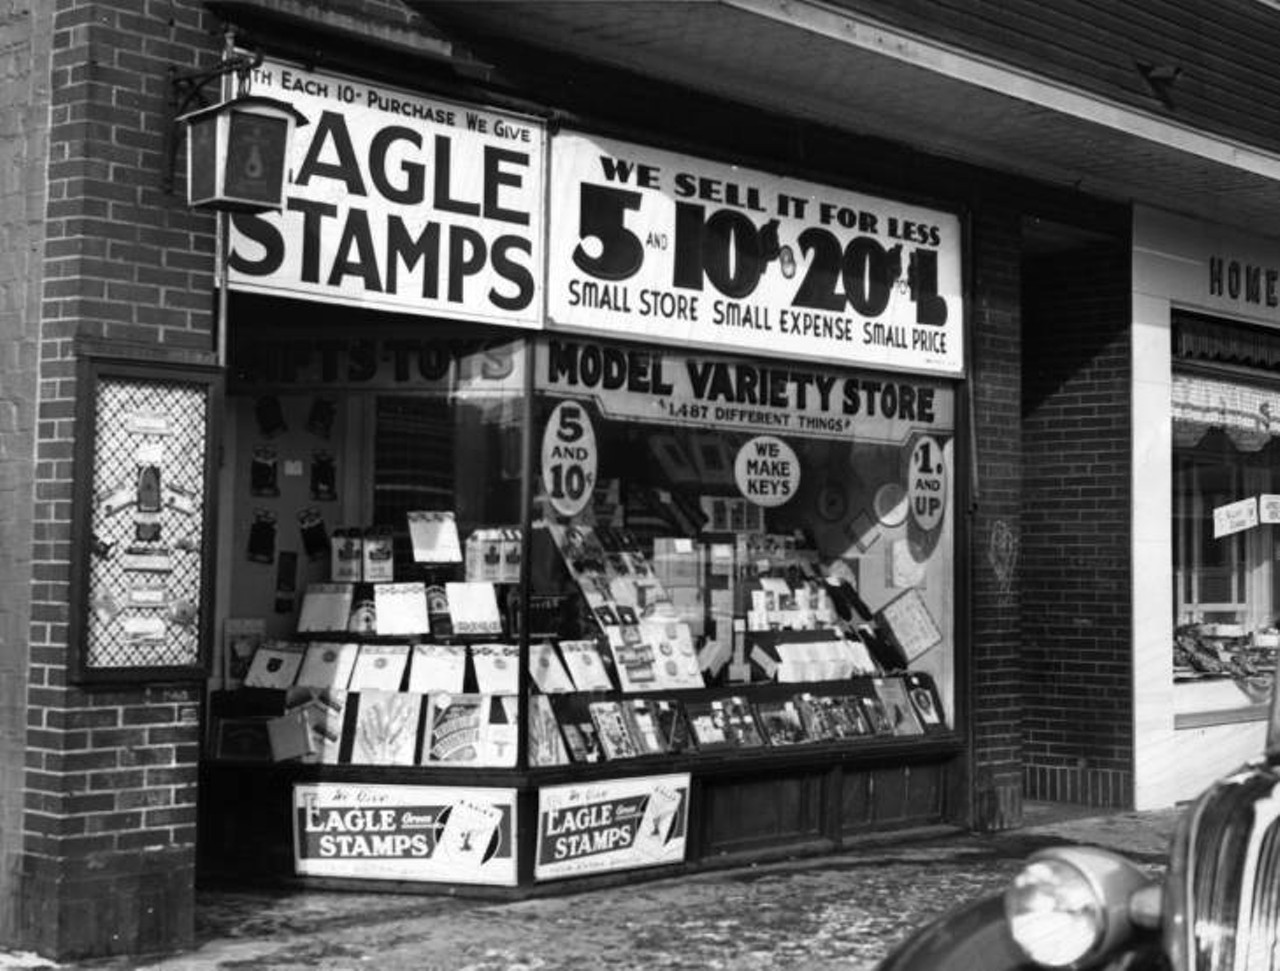  Mongl Variety Store, Hayden Avenue, 1938 